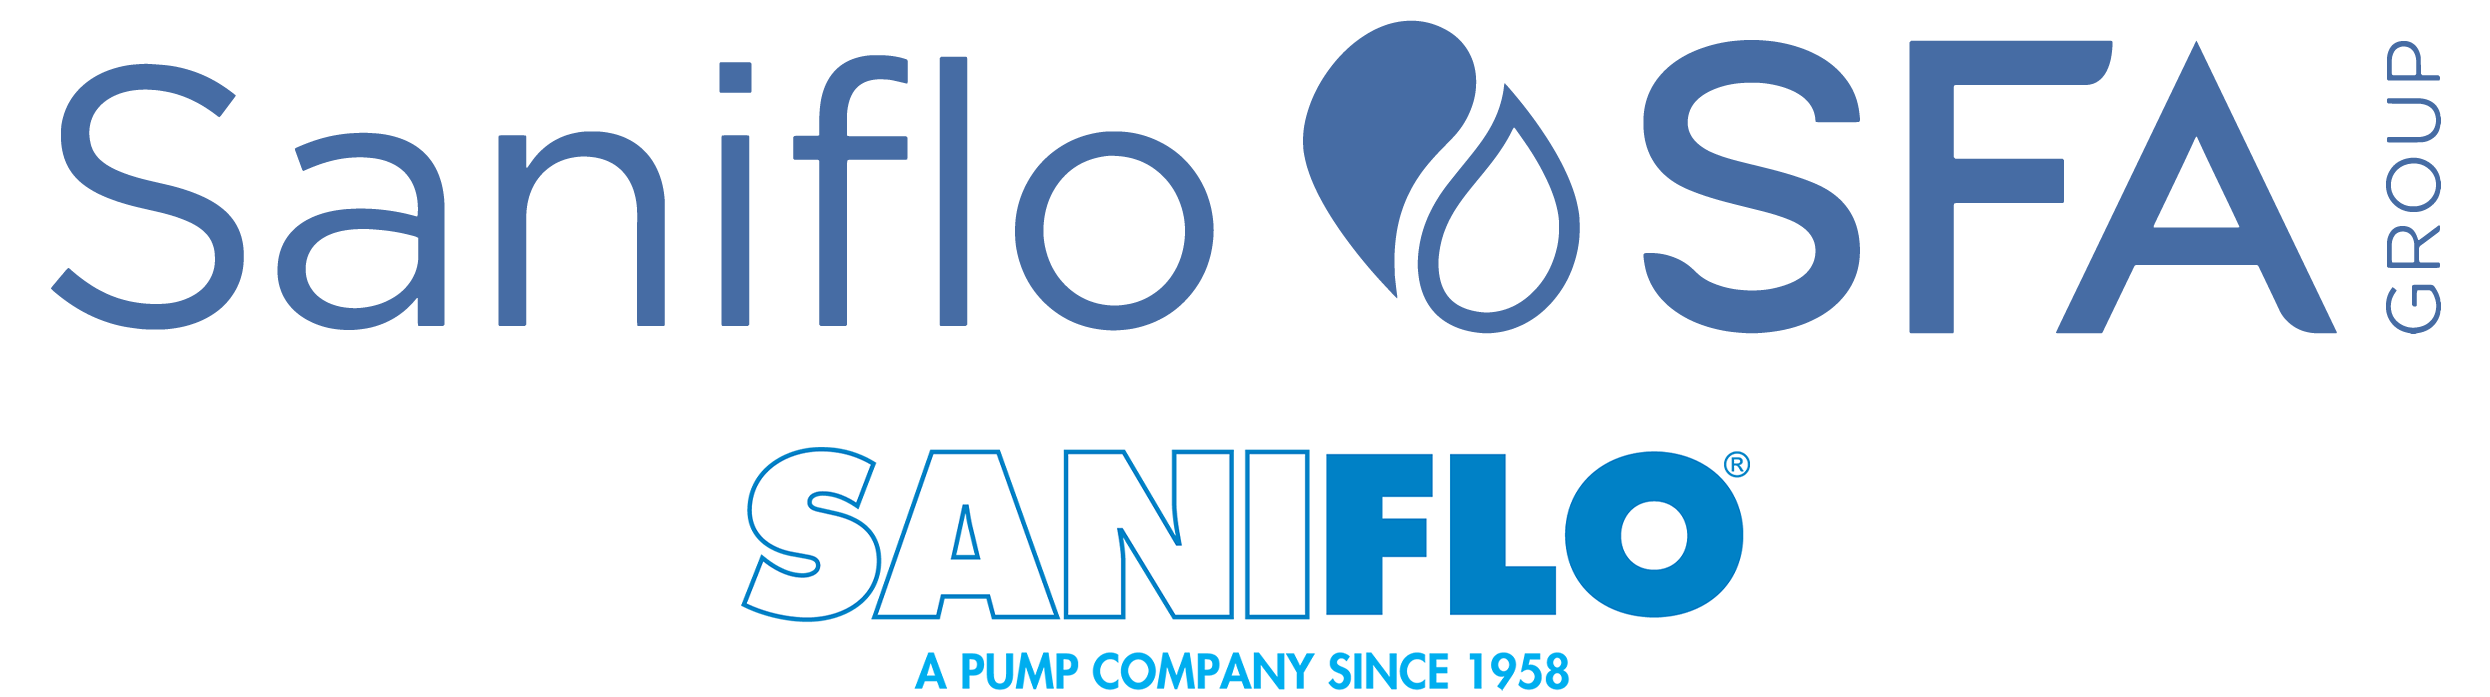 Saniflo_NEW-OLD-BLUE_Logo-1